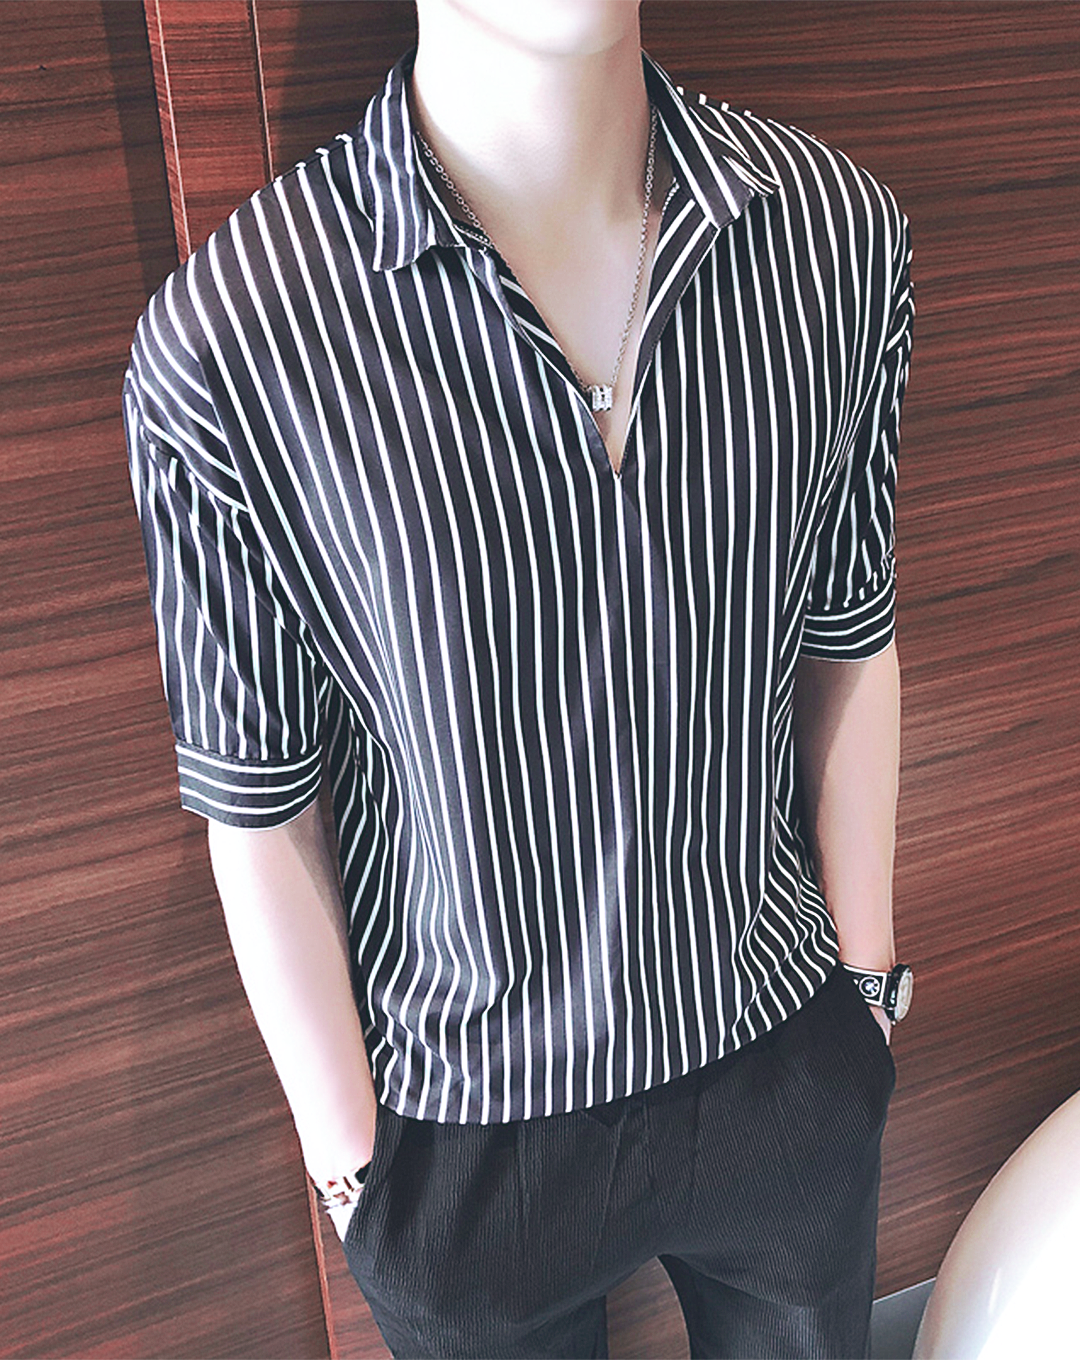 ♂Men's Striped Shirt